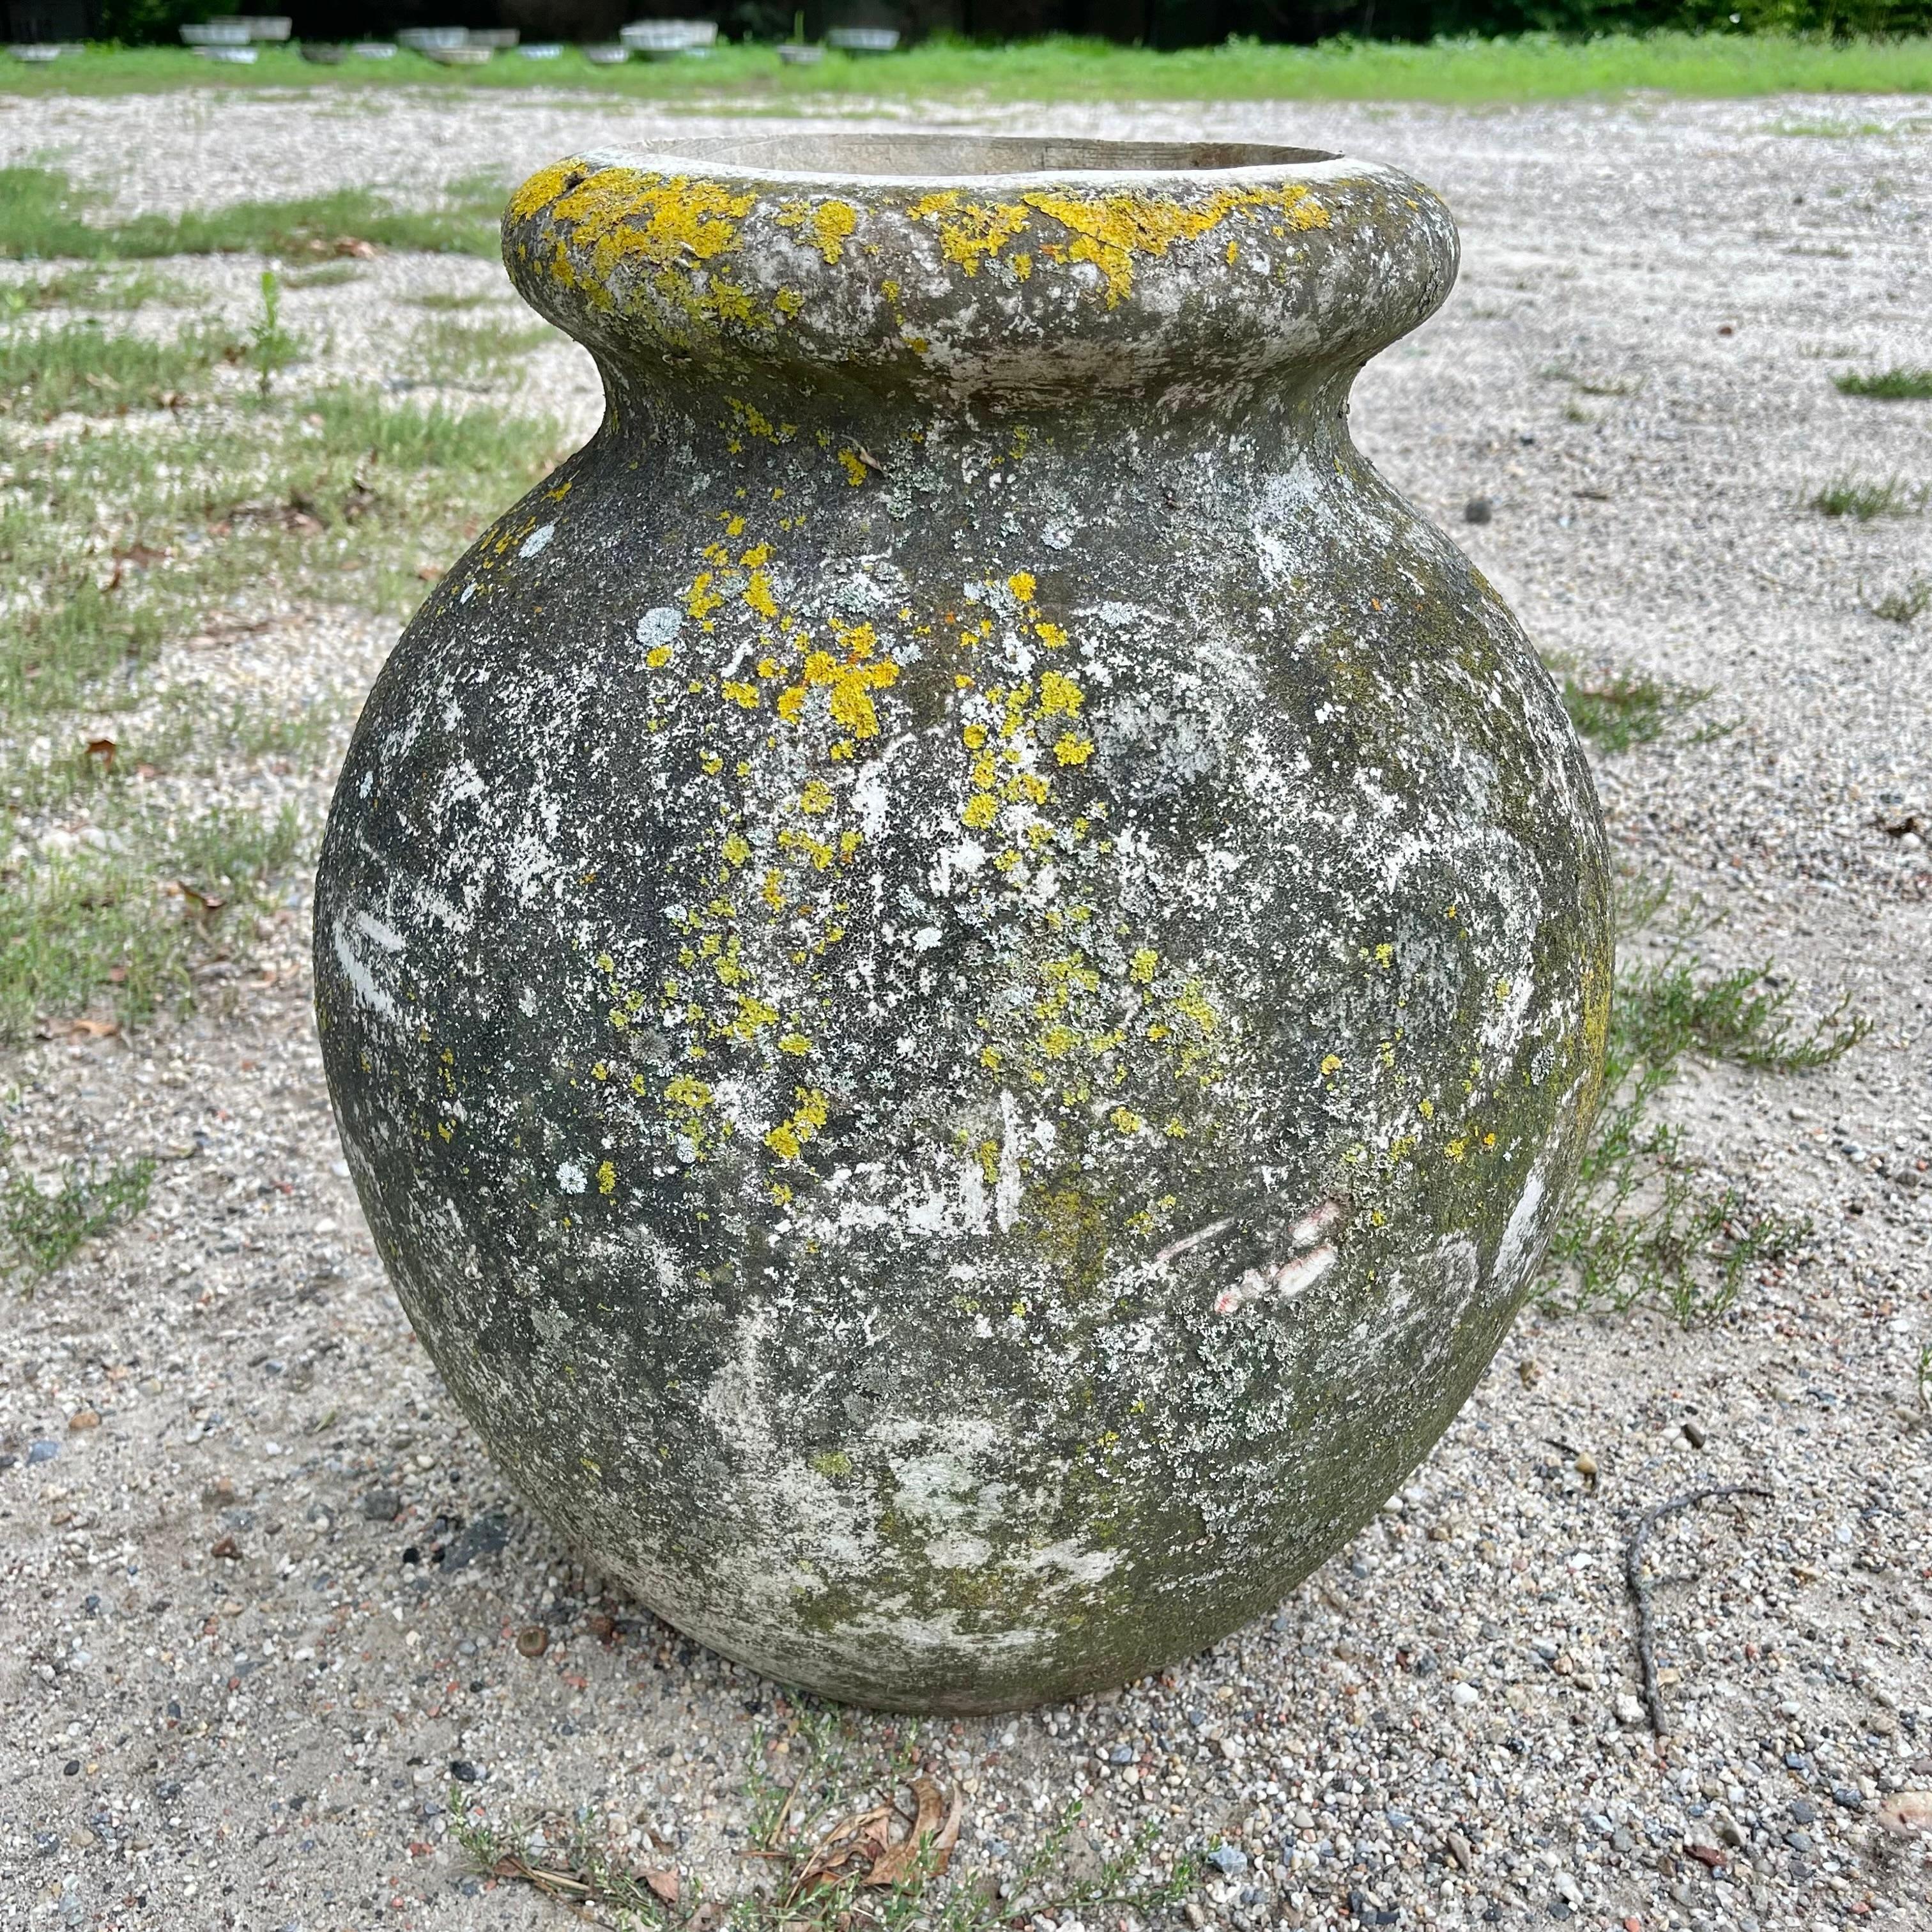 Concrete Willy Guhl Olive Jar Planter, 1960s Switzerland For Sale